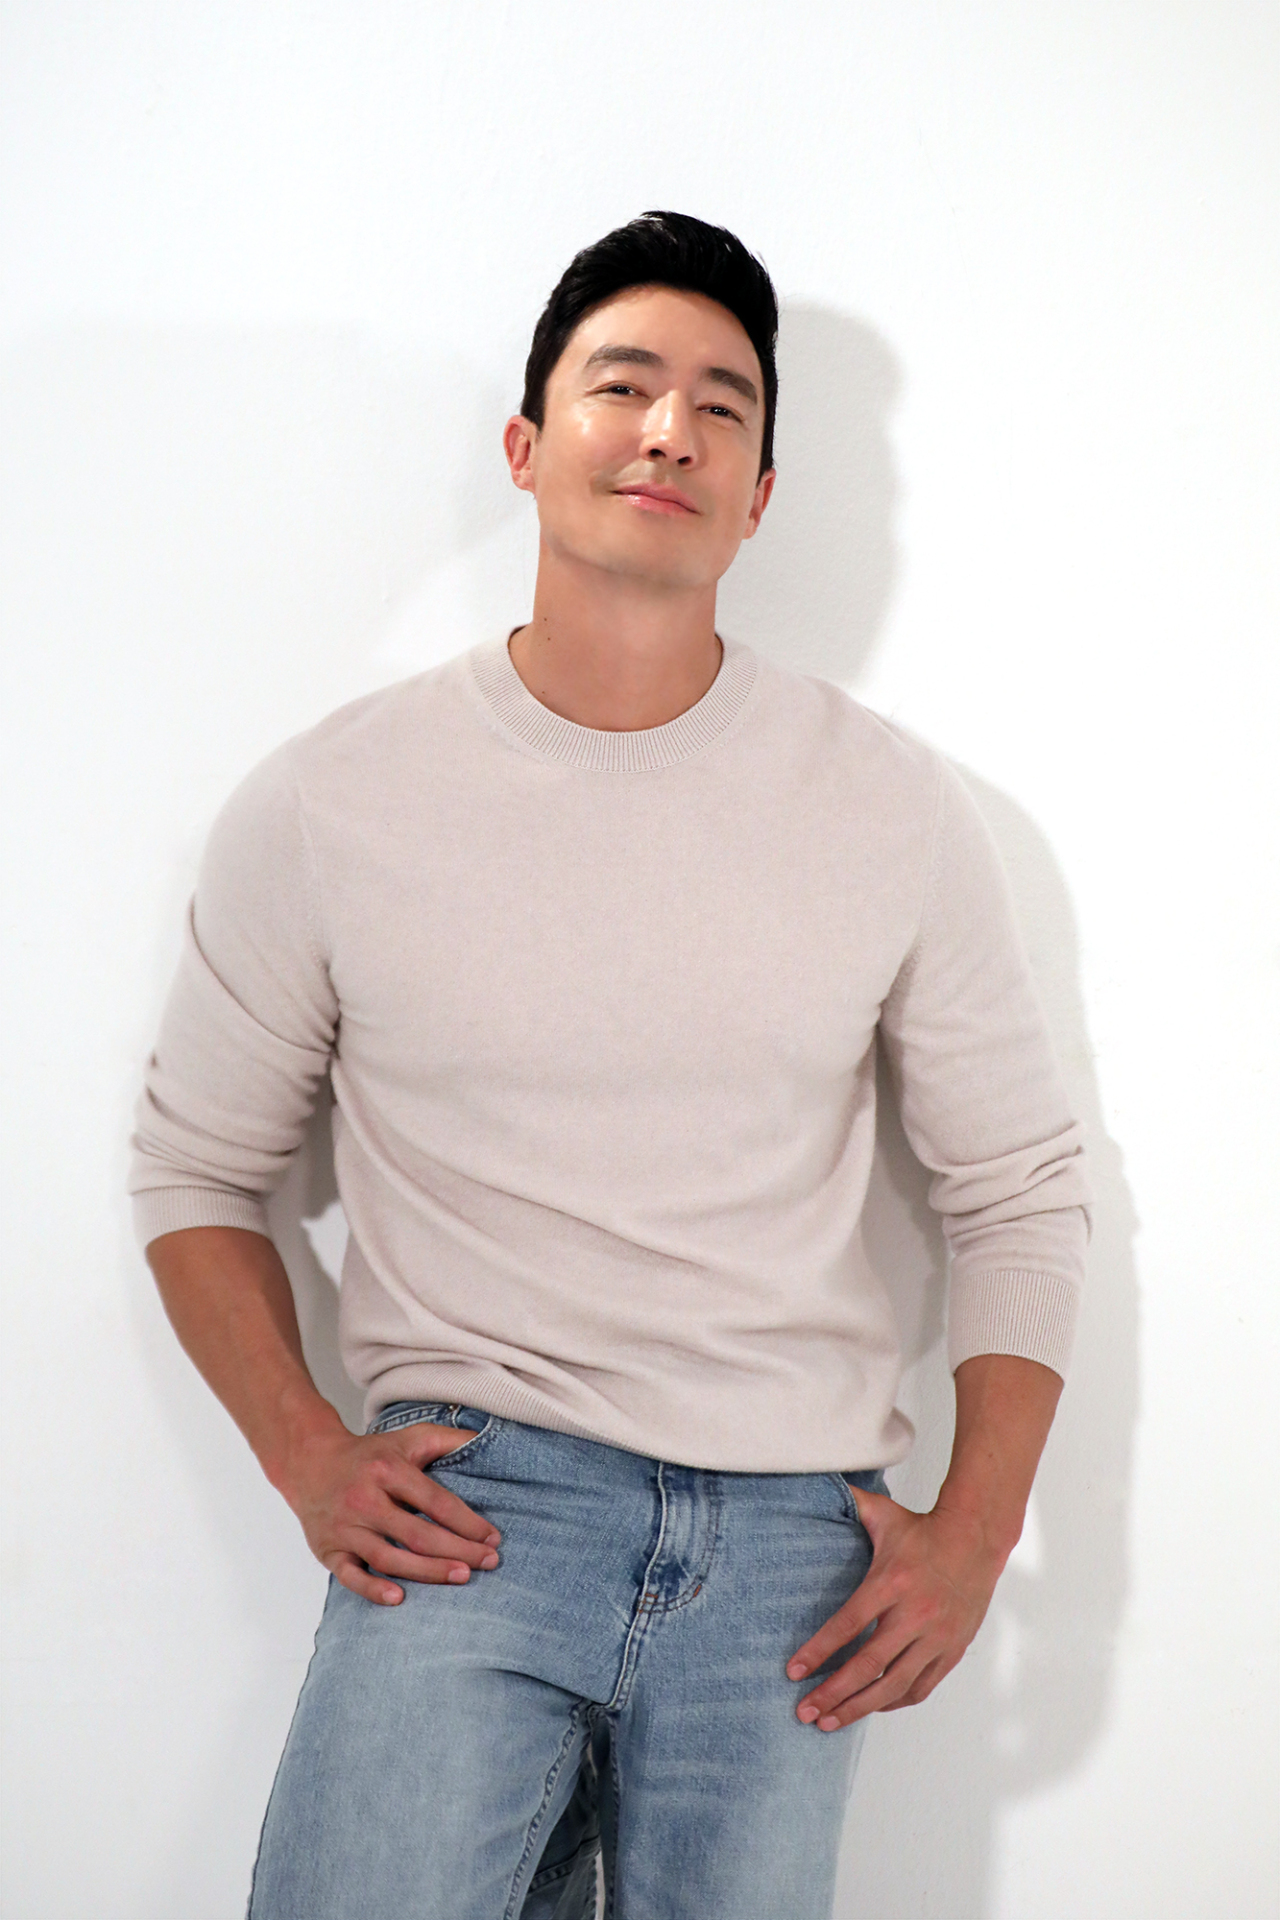 Korean American actor Daniel Henney (Echo Global Group)